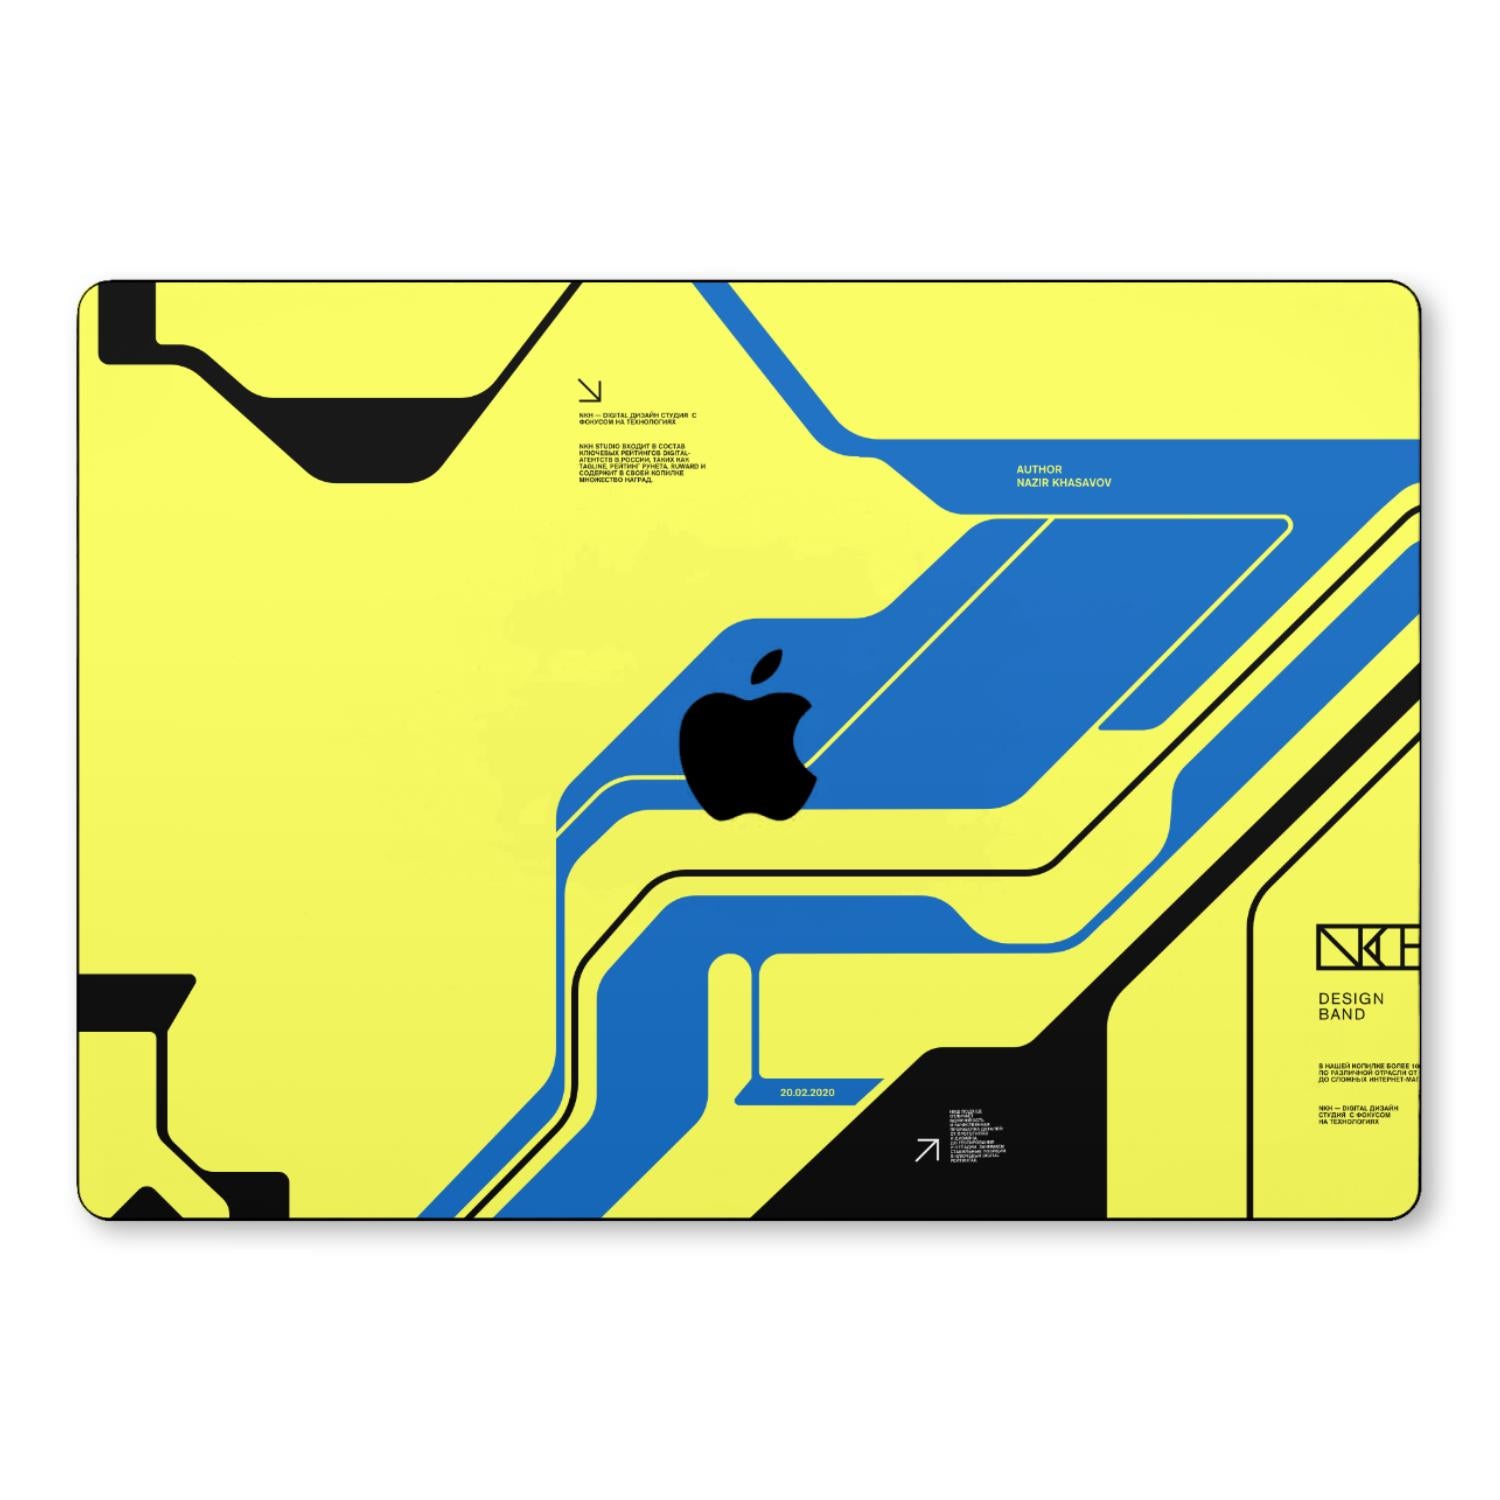 Macbook Air 11 inch (2013) Skins & Wraps